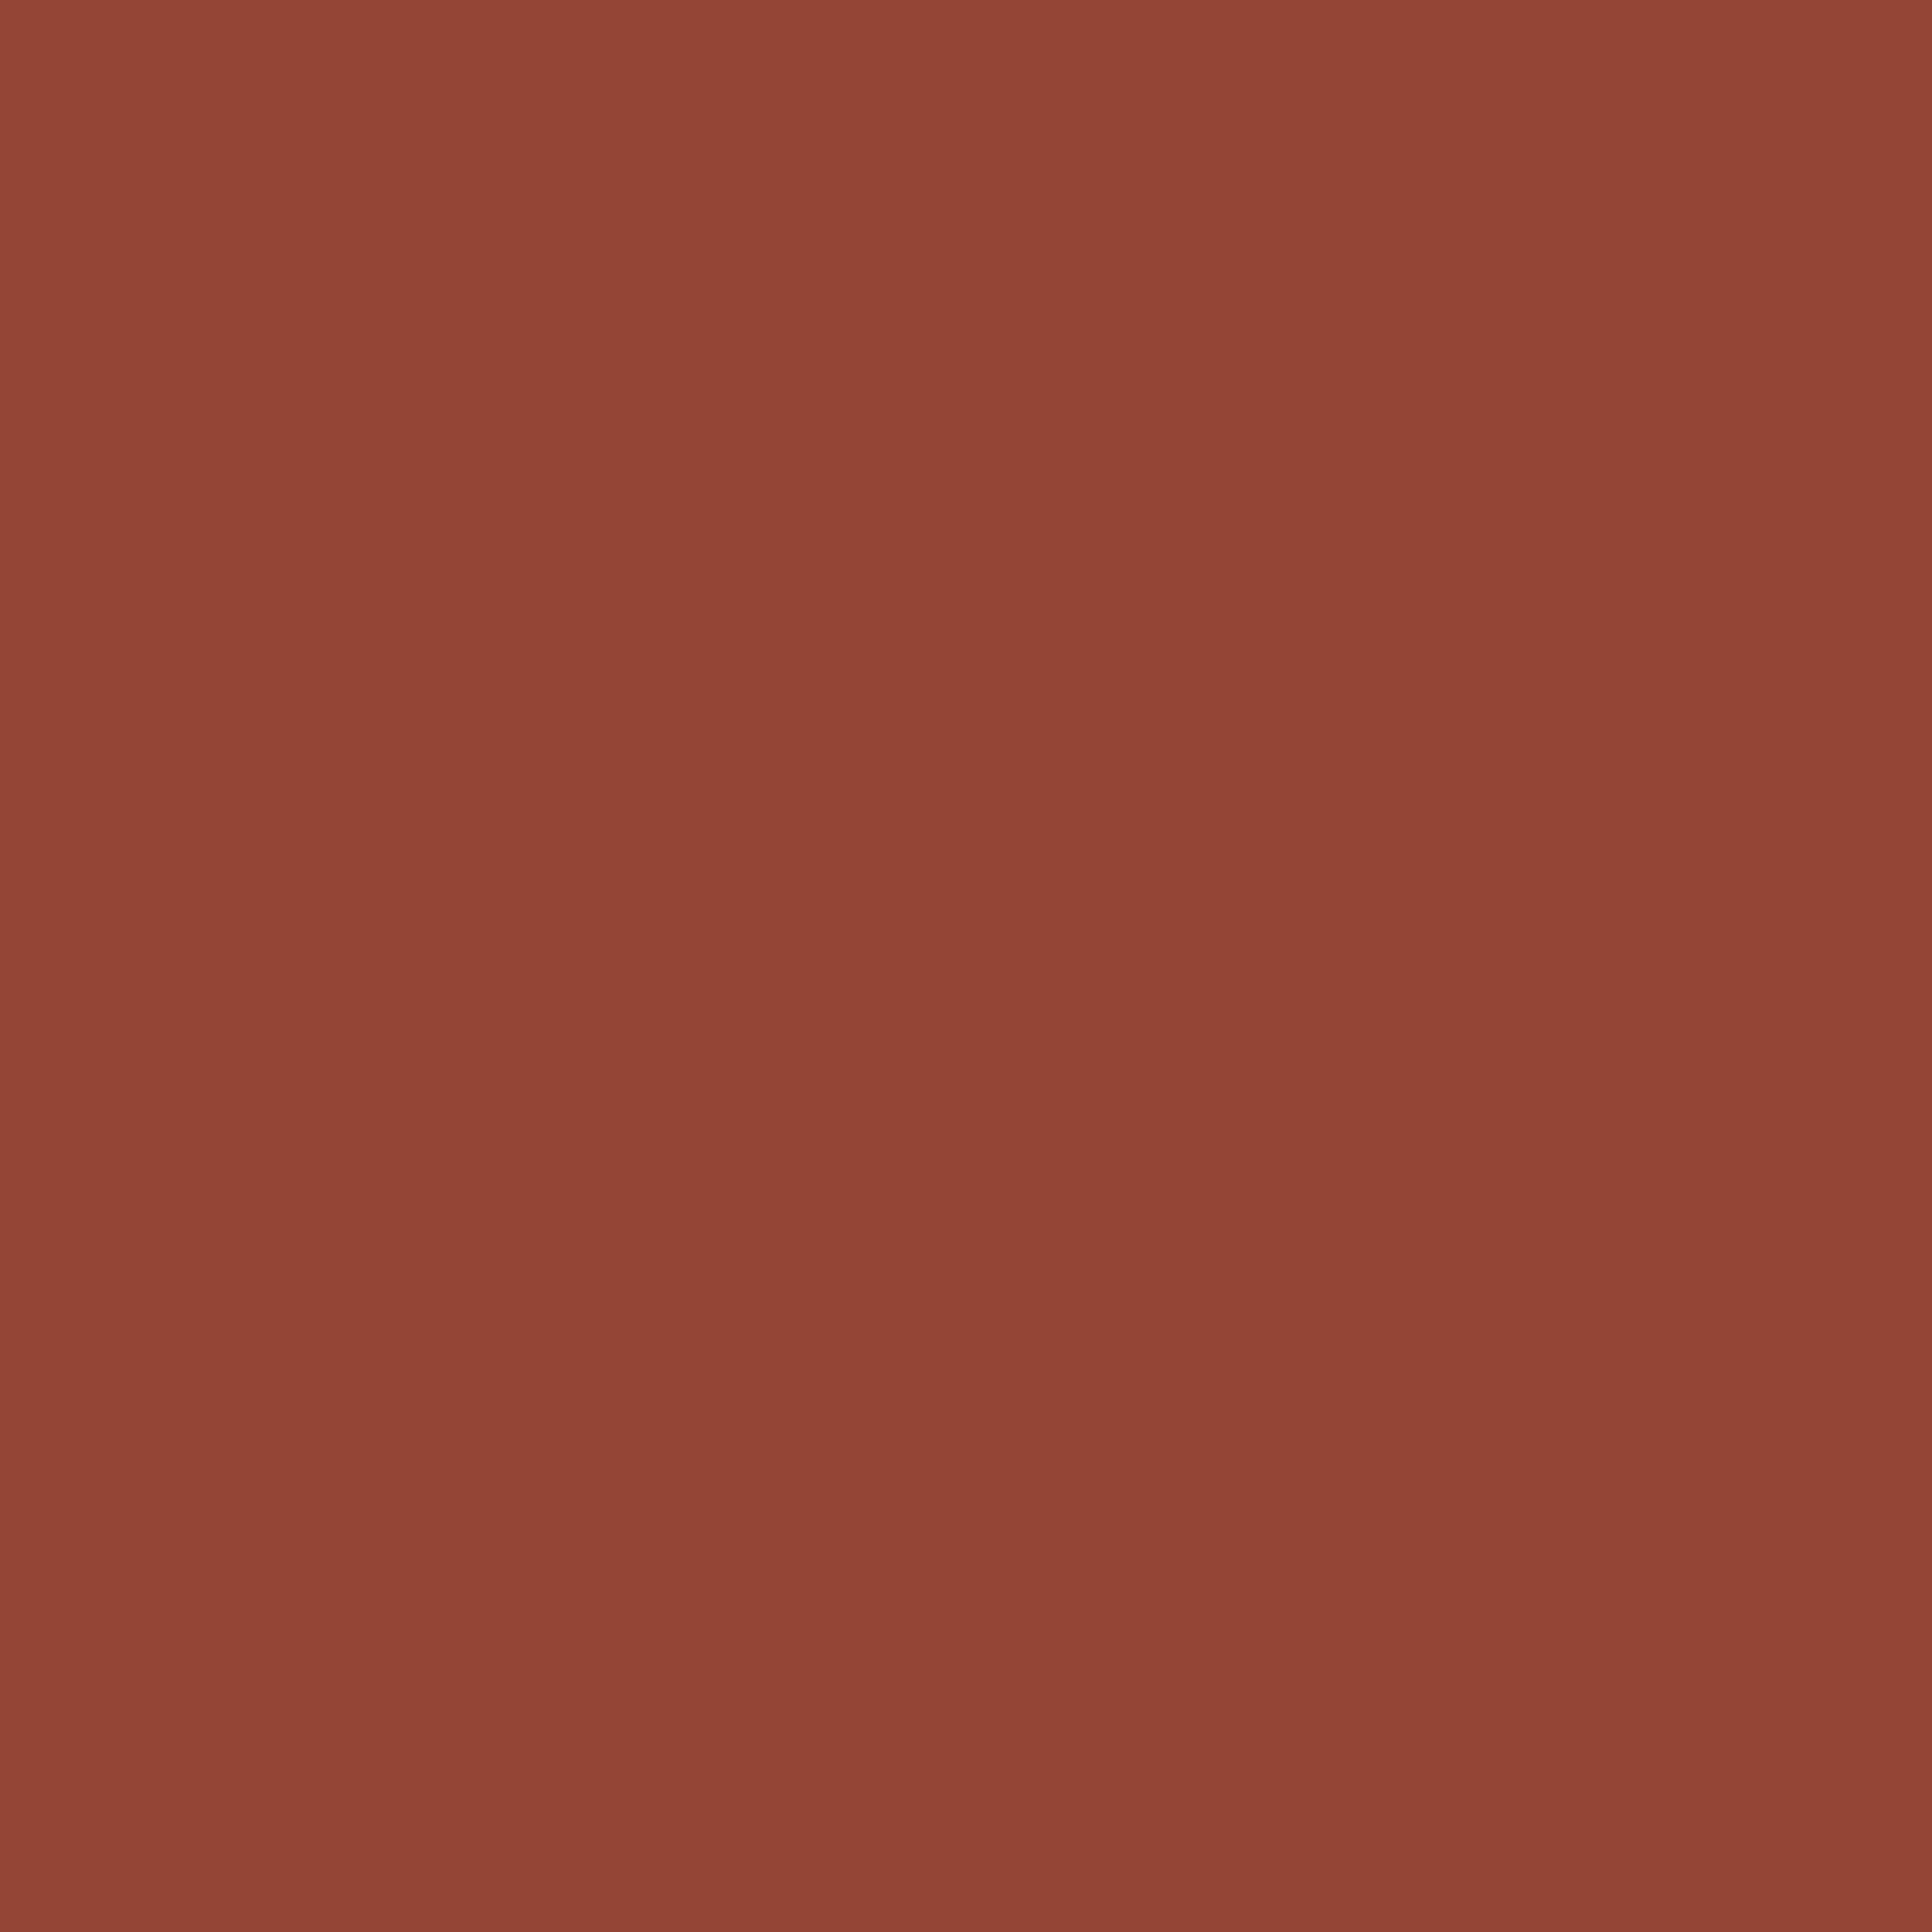 2732x2732 Chestnut Solid Color Background